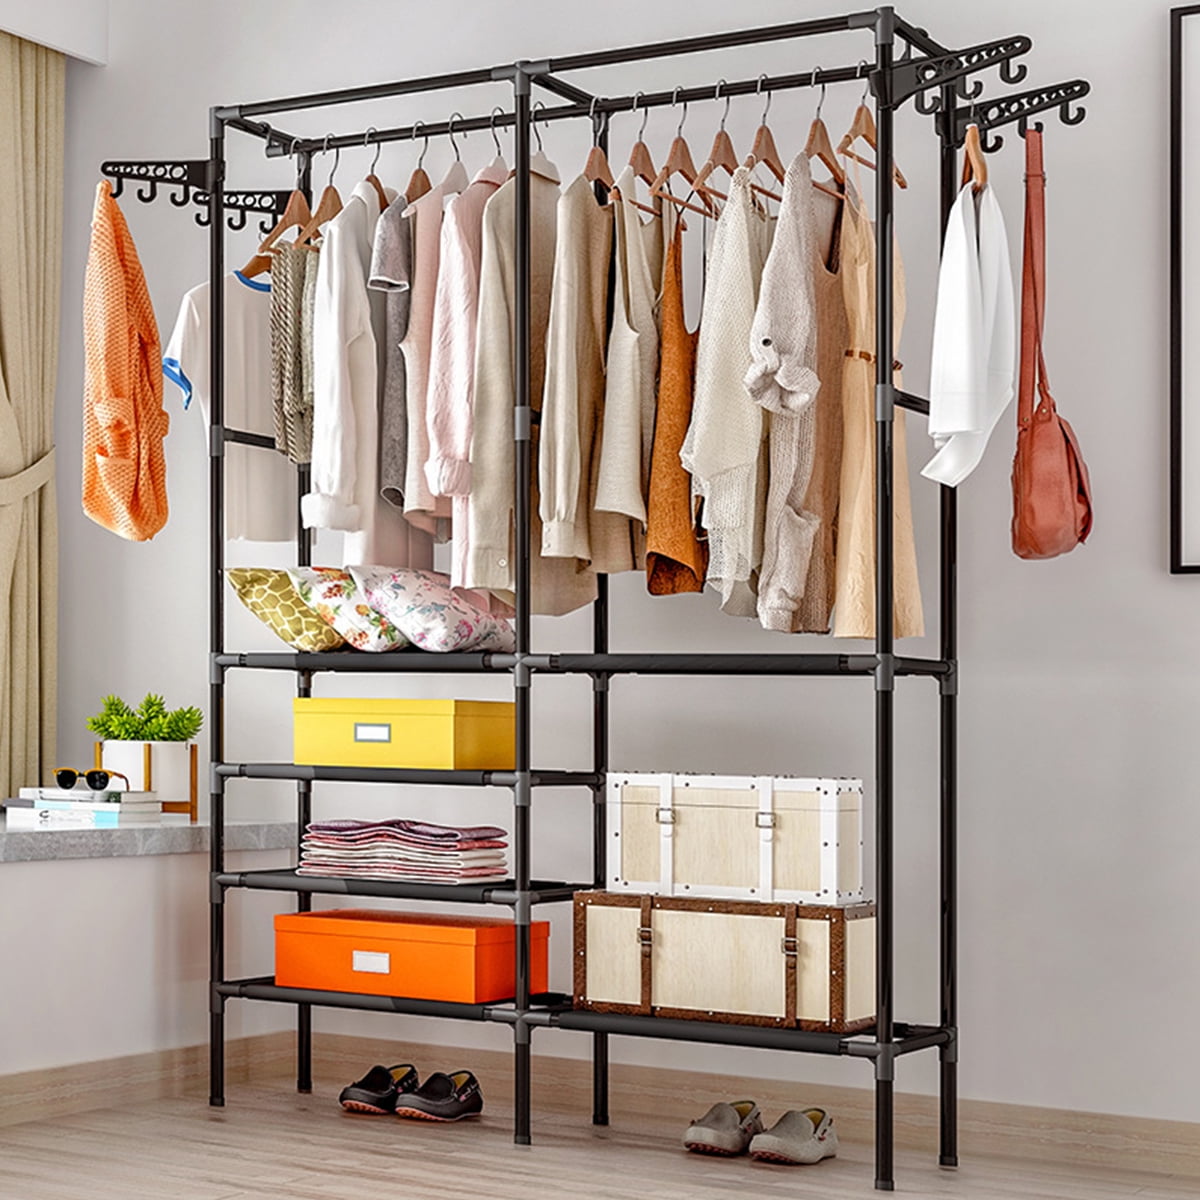 Clothes Hanger Rack Hanger Stand Garment Display Home Organizer Shelf